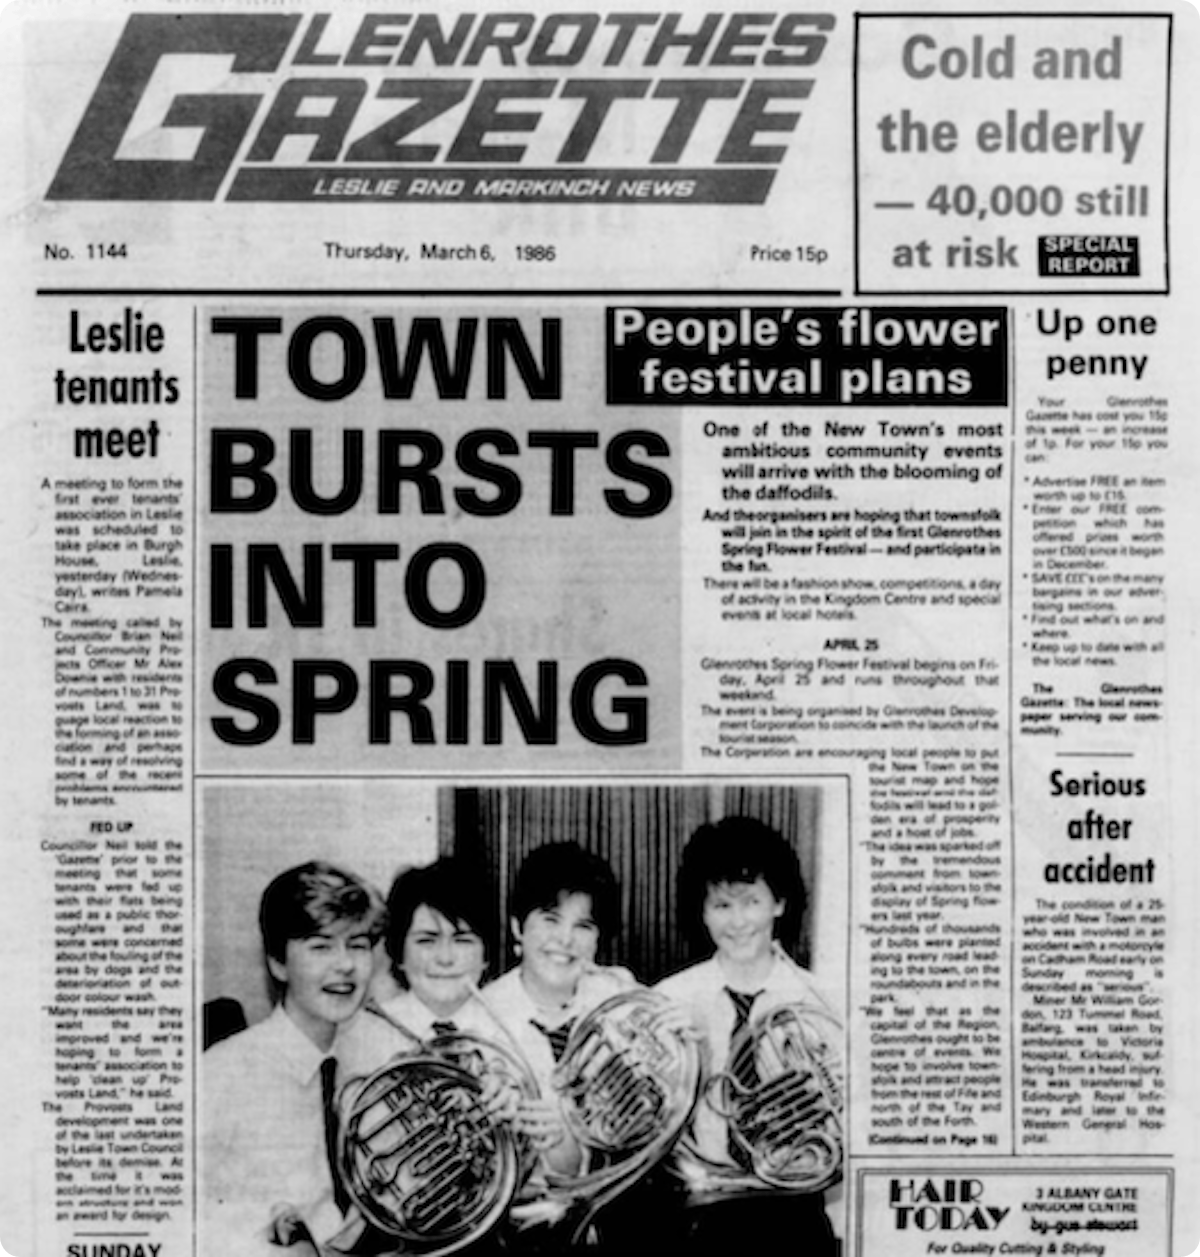 Glenrothes Gazette, 6 March 1986.